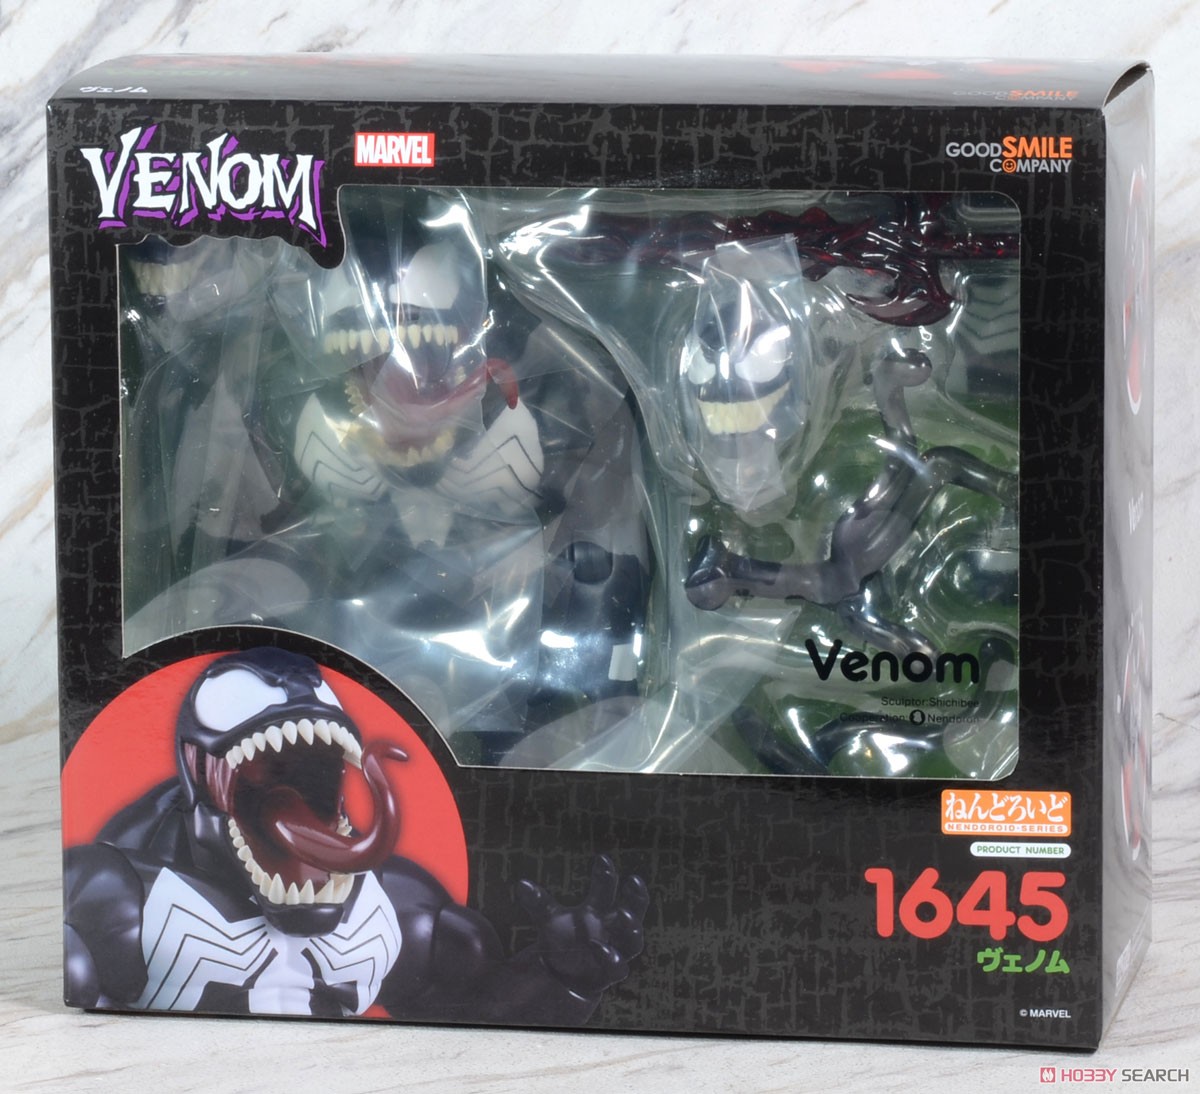 Nendoroid Venom (Completed) Package1